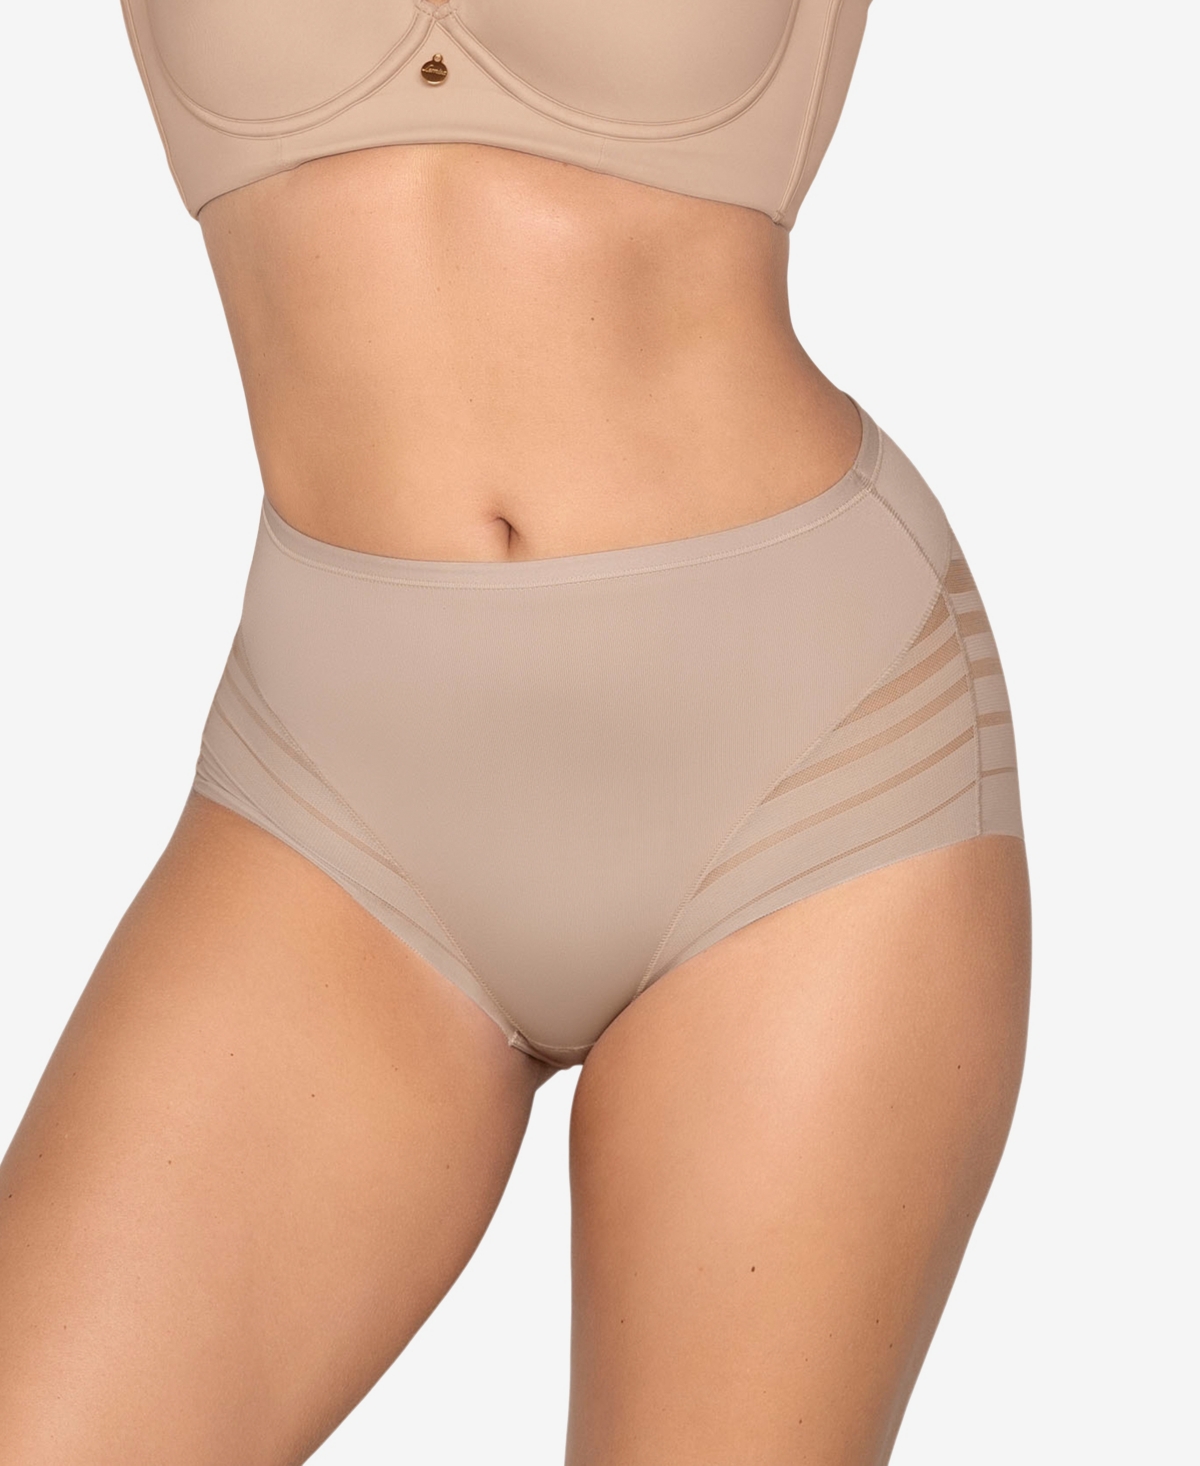 Women's Lace Stripe Undetectable Classic Shaper Panty - Golden Beige